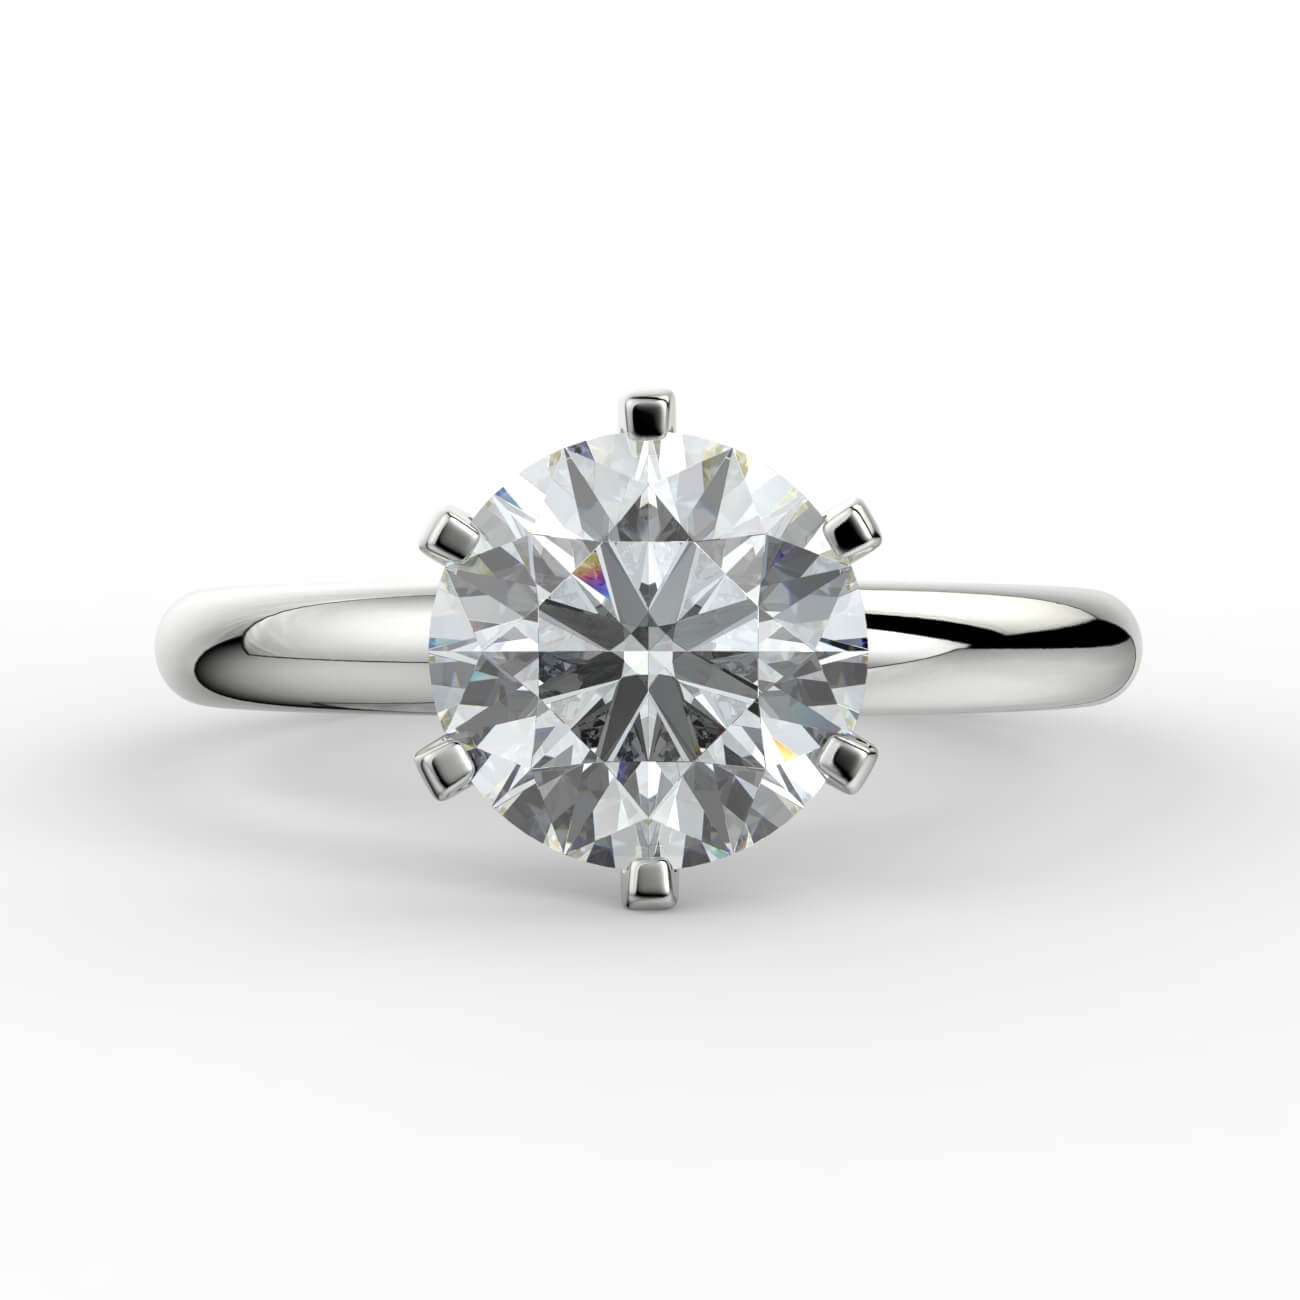 Solitaire diamond engagement ring in white gold – Australian Diamond Network